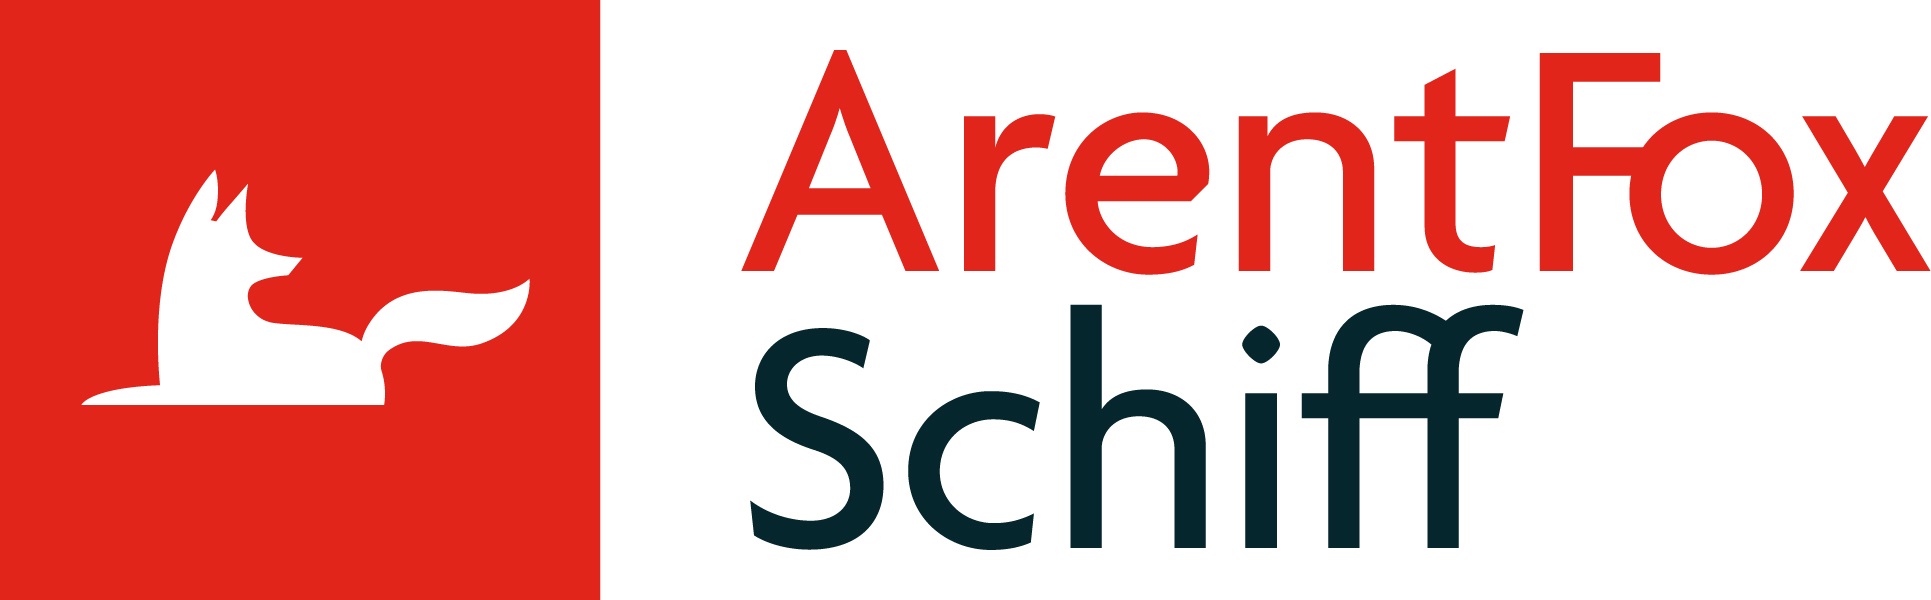 arentfox schiff logo